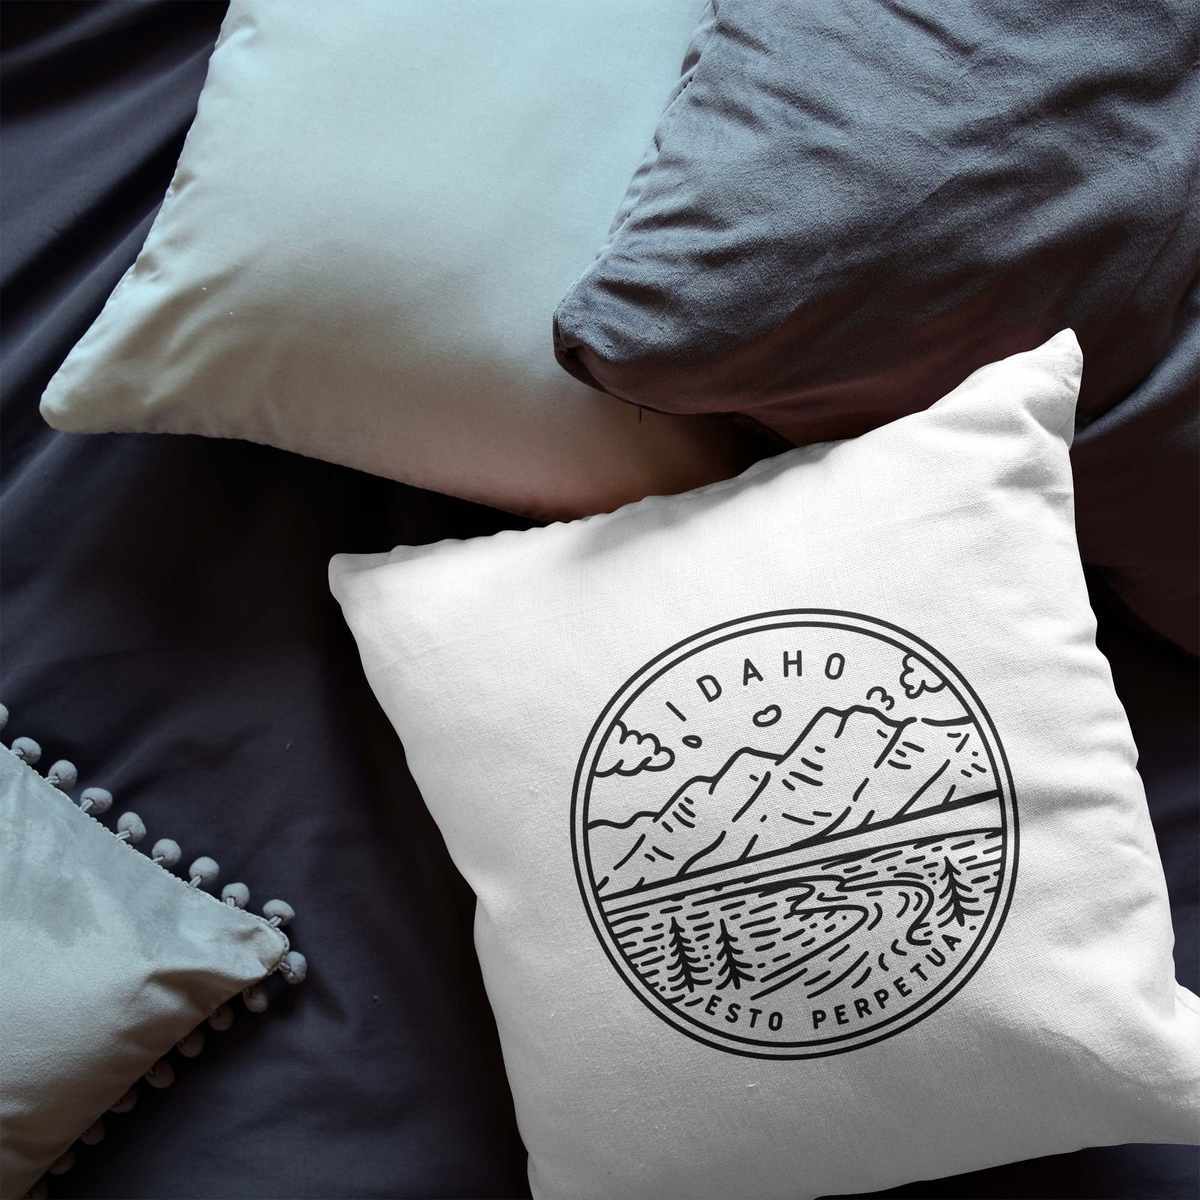 Idaho State Crest Throw Pillow